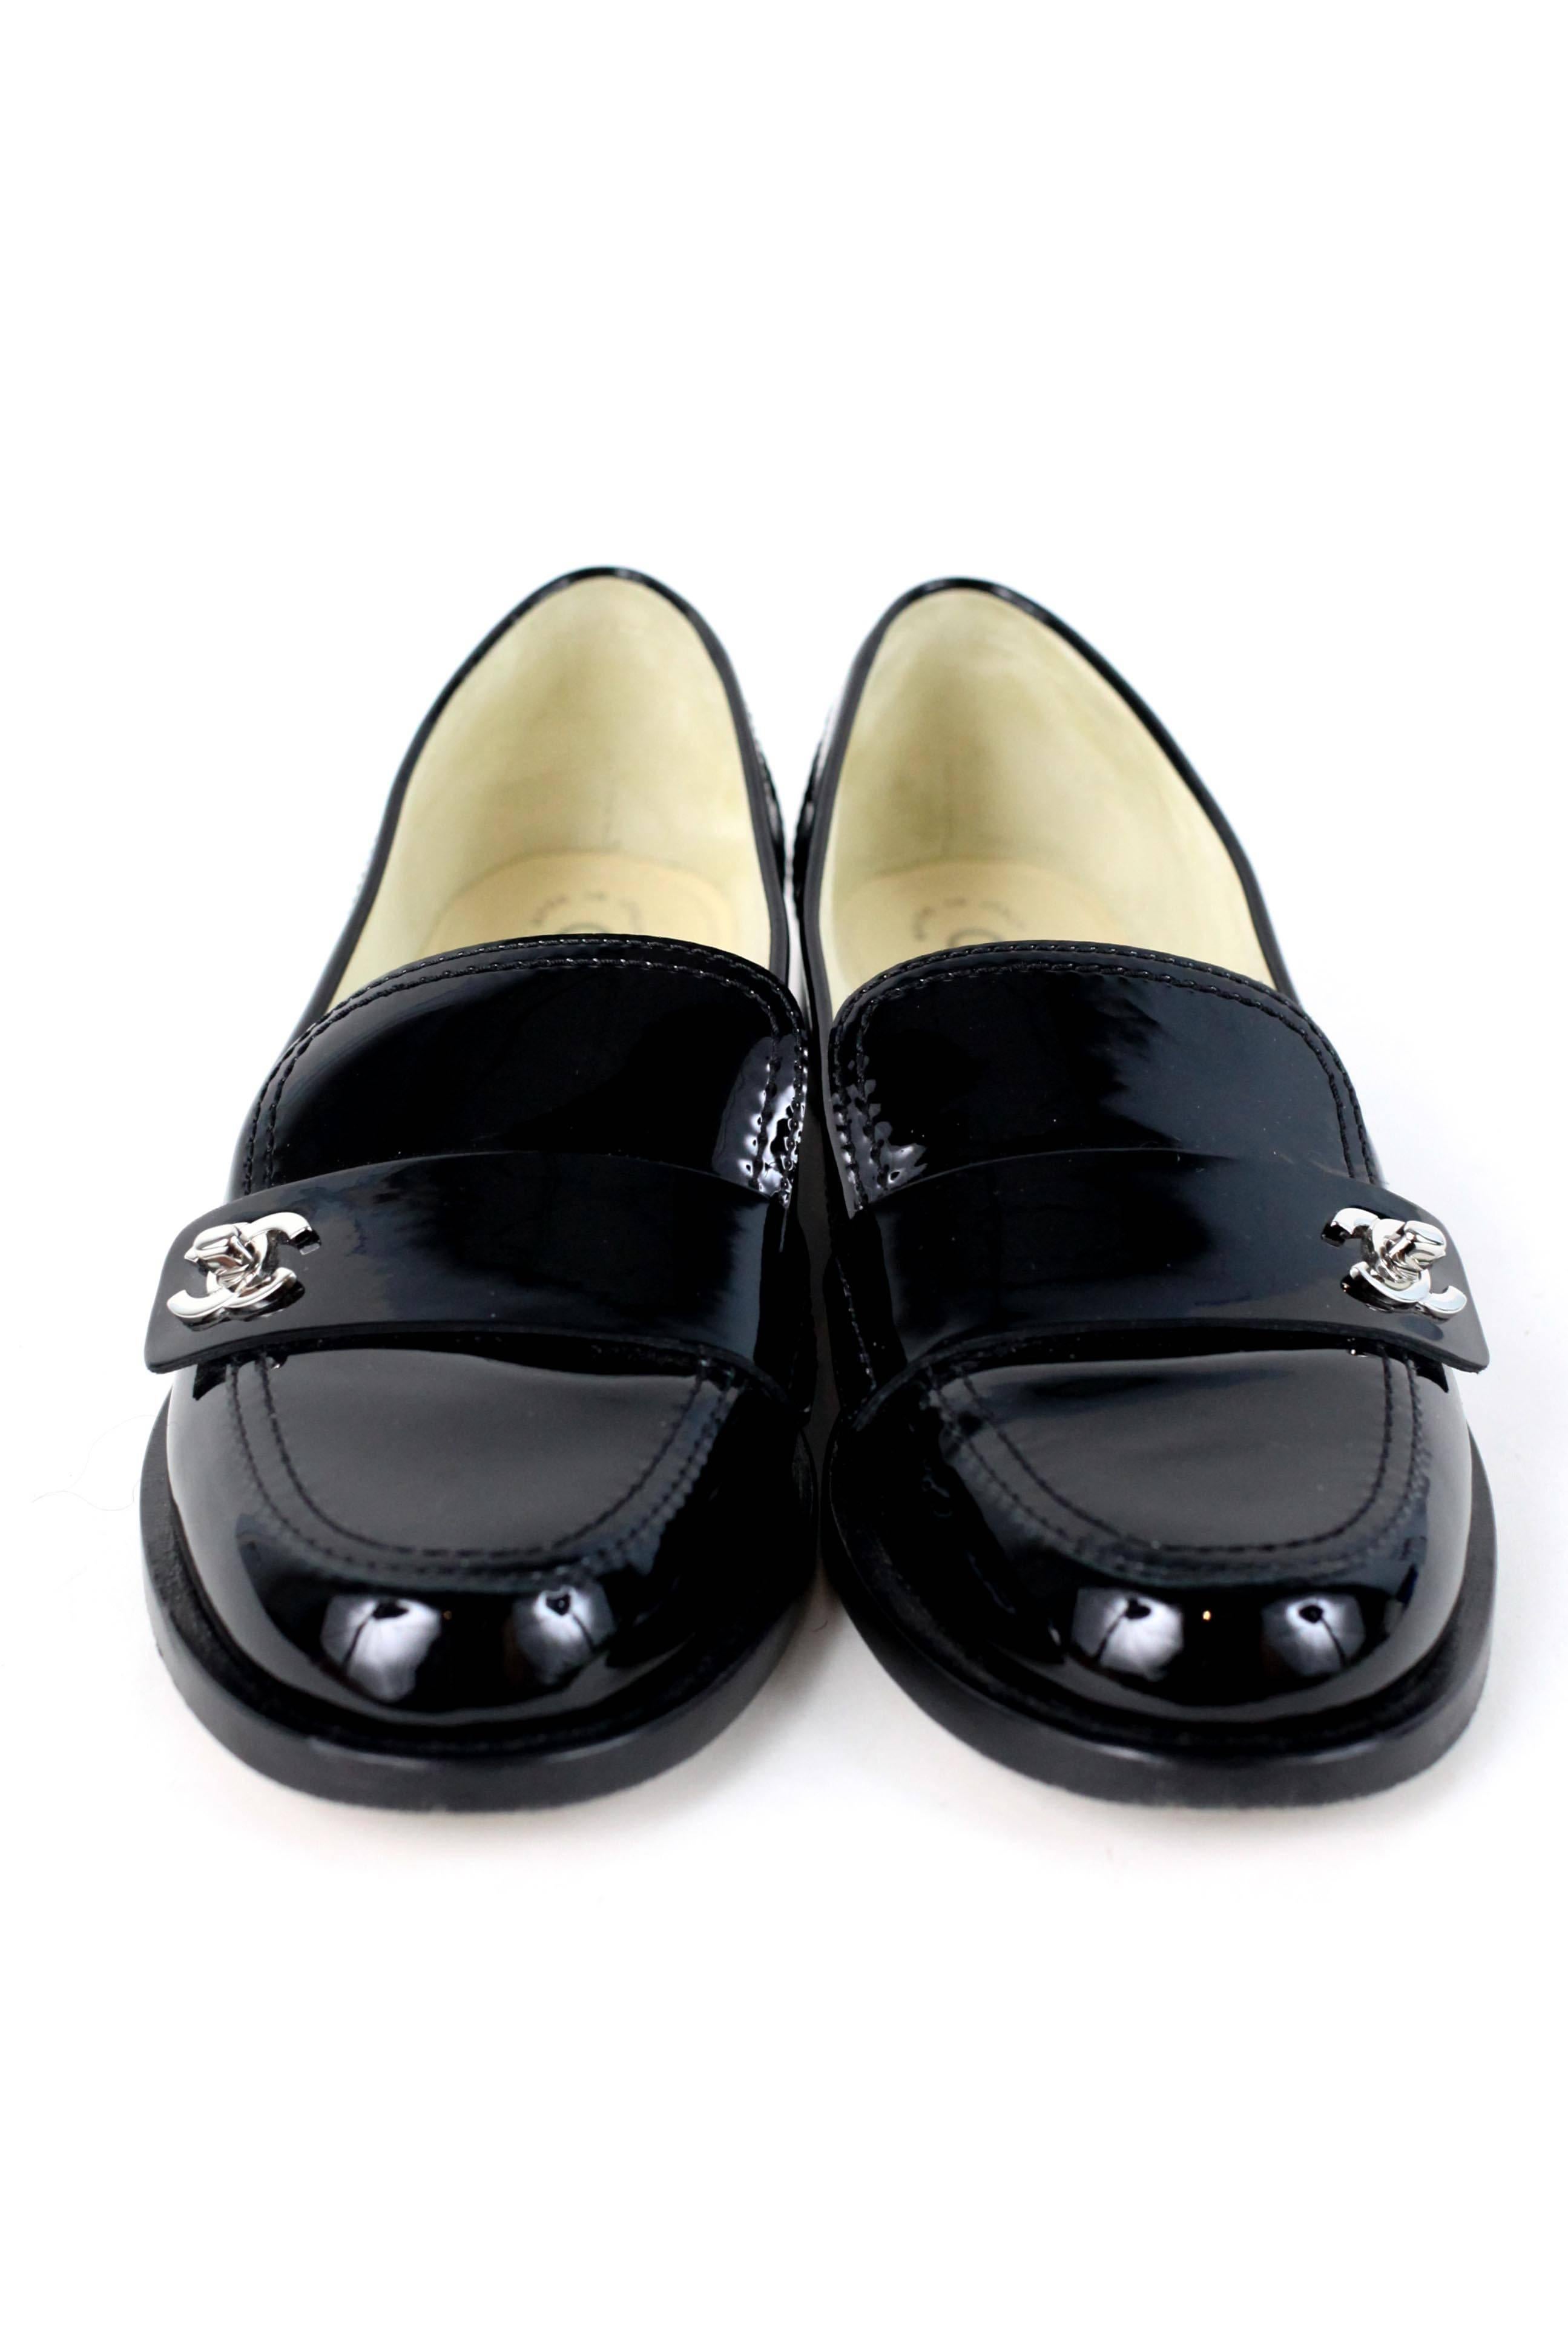 Women's Chanel Loafer Black W/CC 36